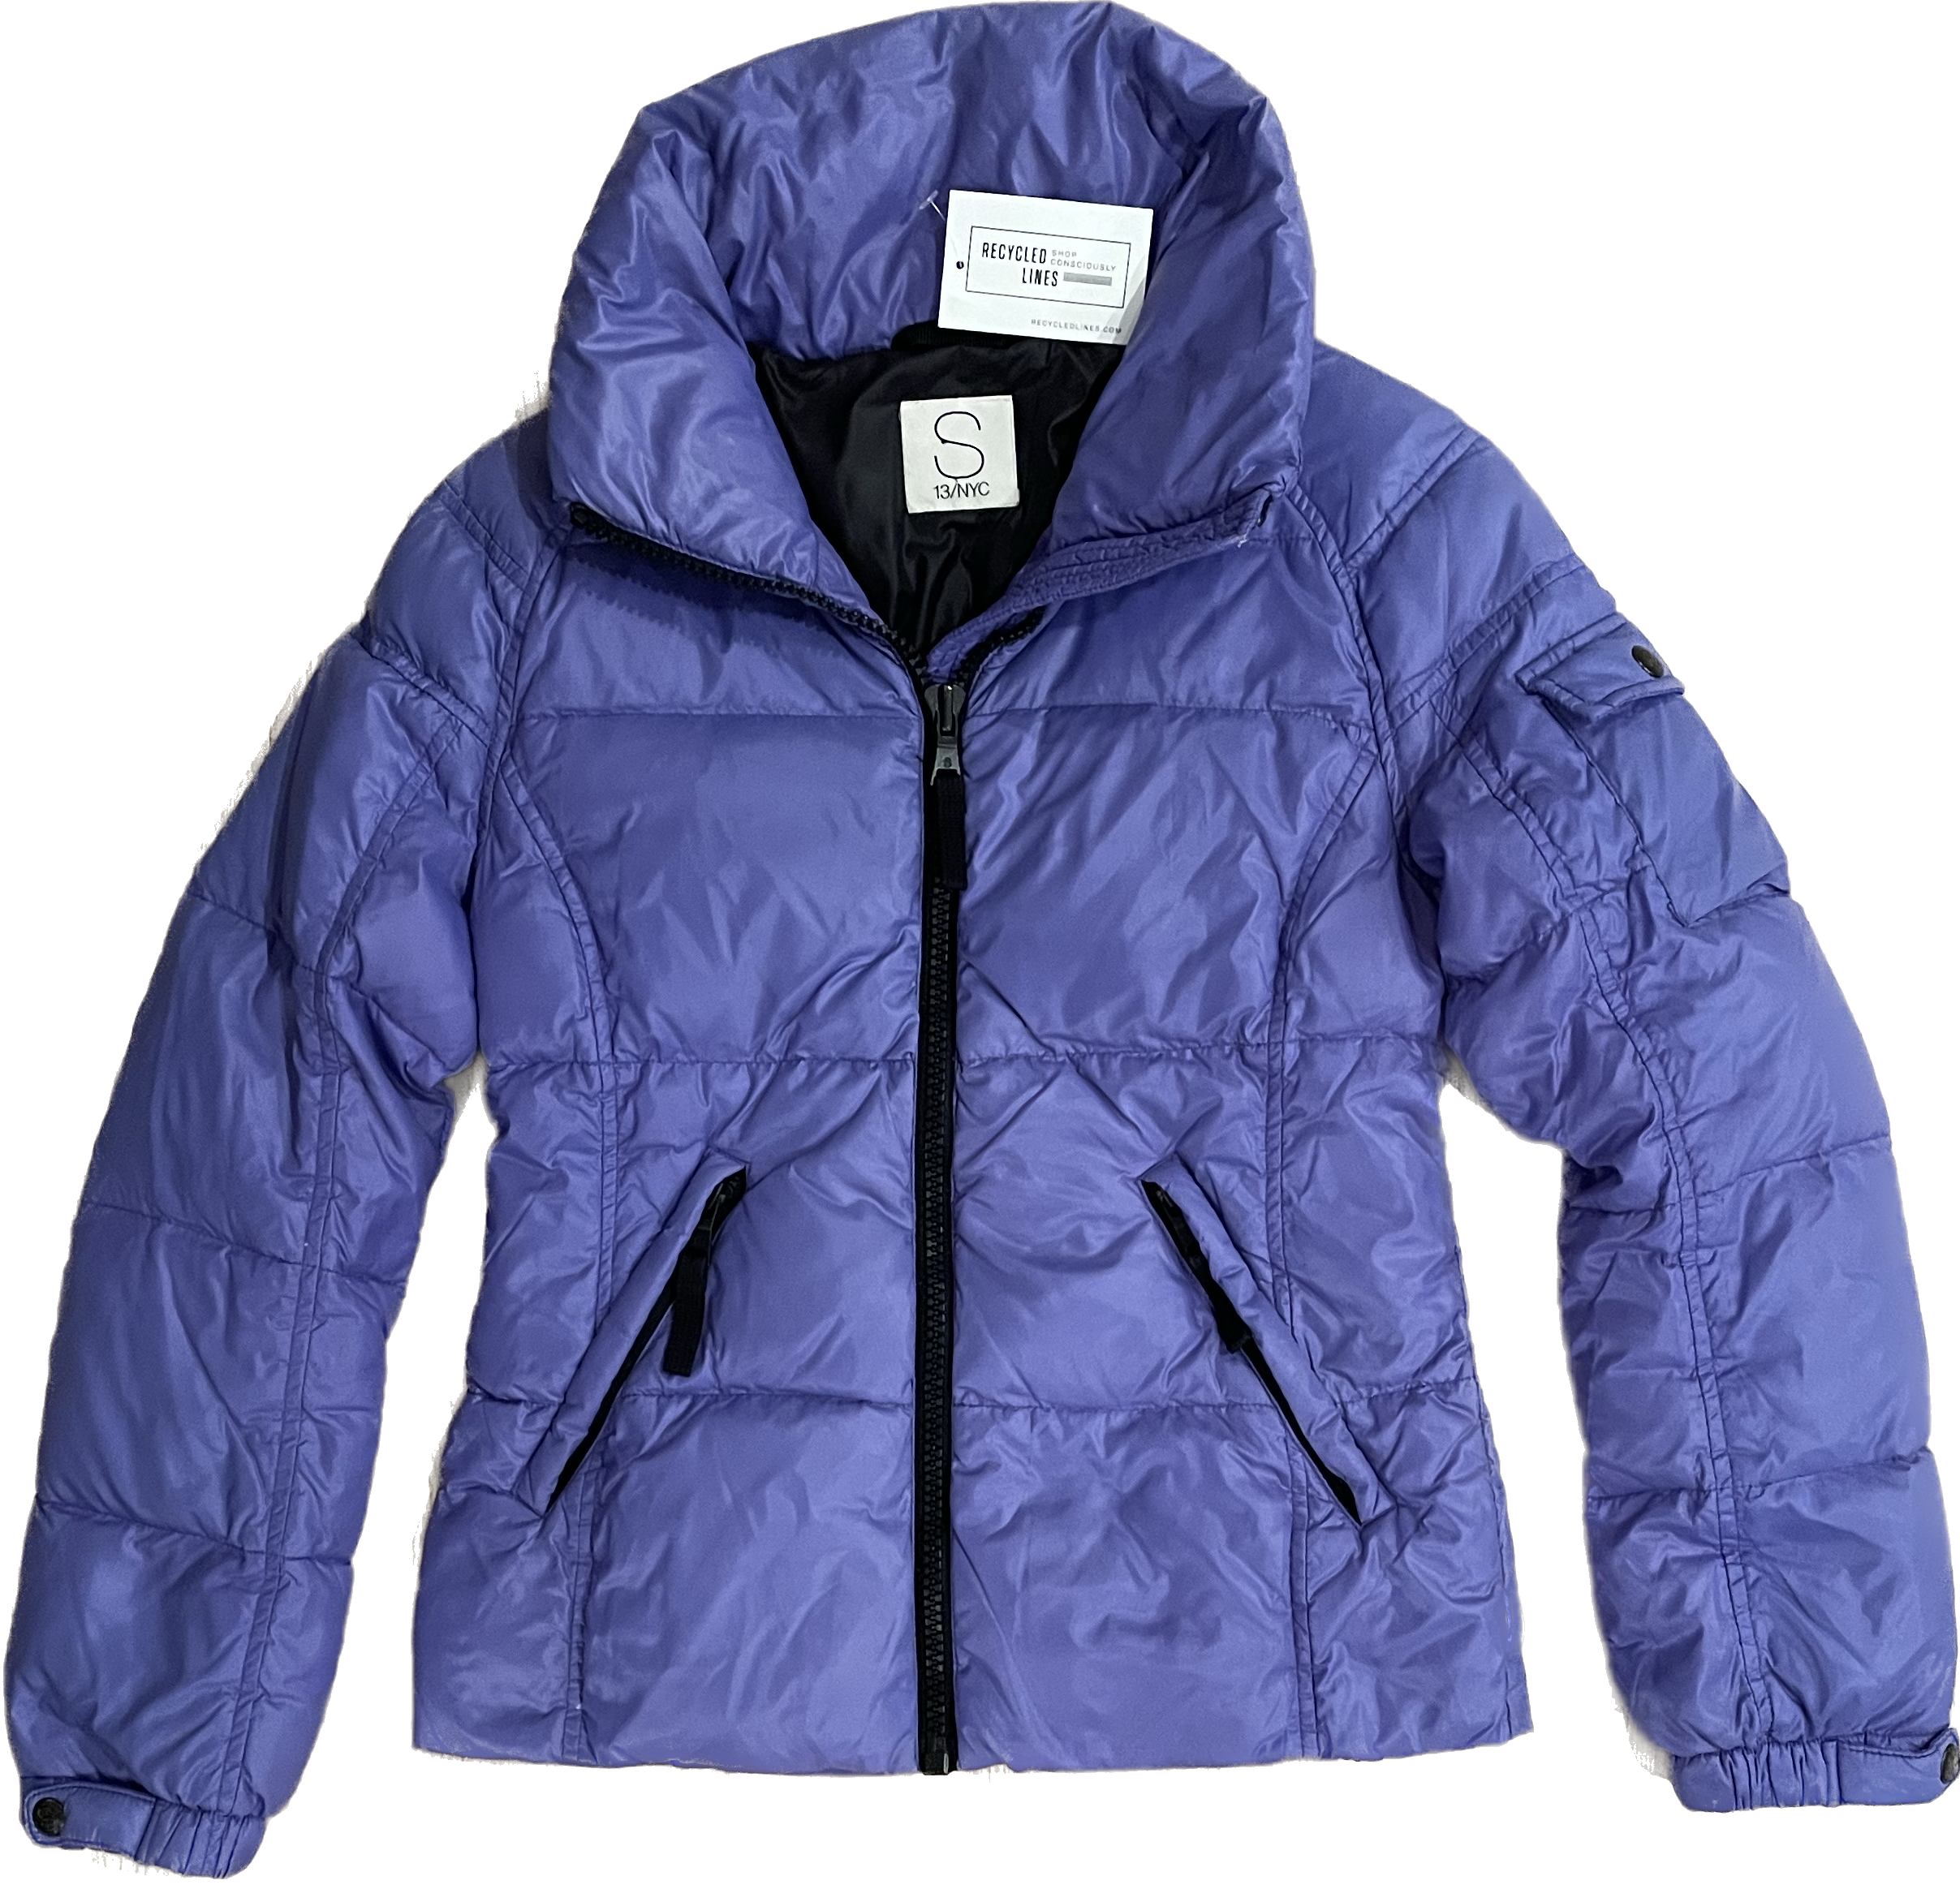 Sam NYC Jacket, Purple Girls Size 14